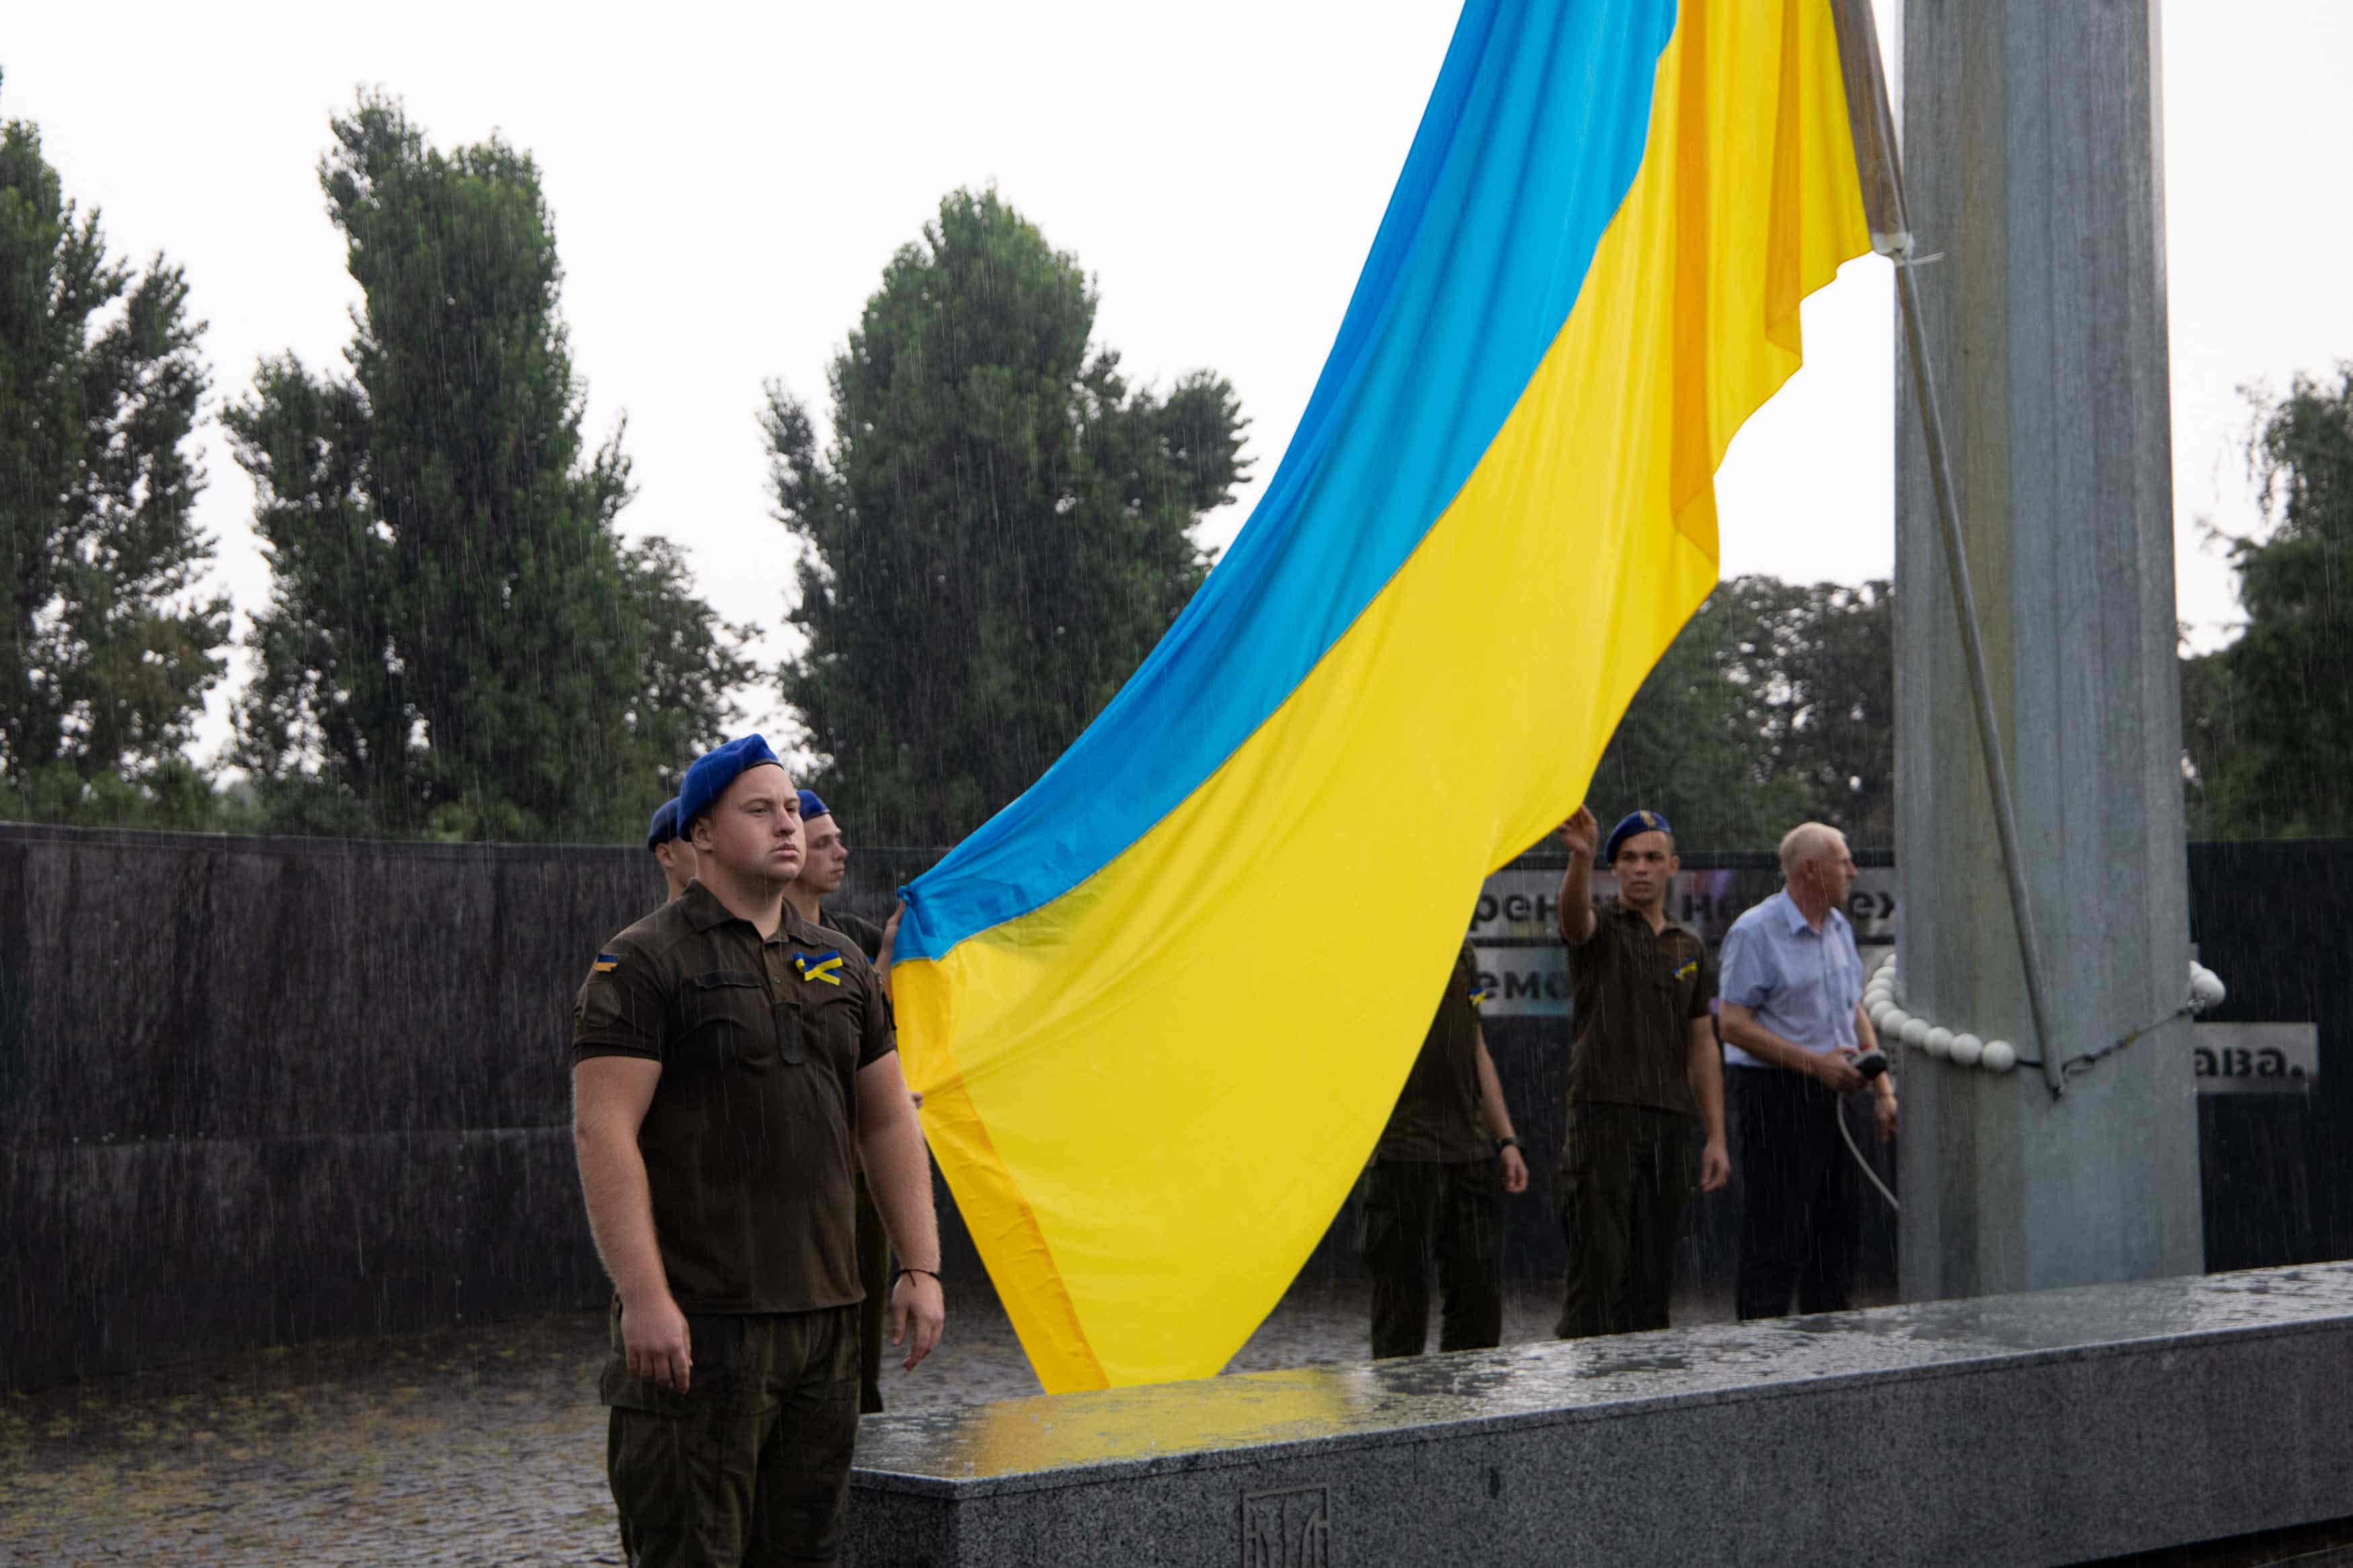 Сьогодні, у День Державного Прапора України, великий синьо-жовтий стяг підняли над площею Богдана Хмельницького в Ужгороді